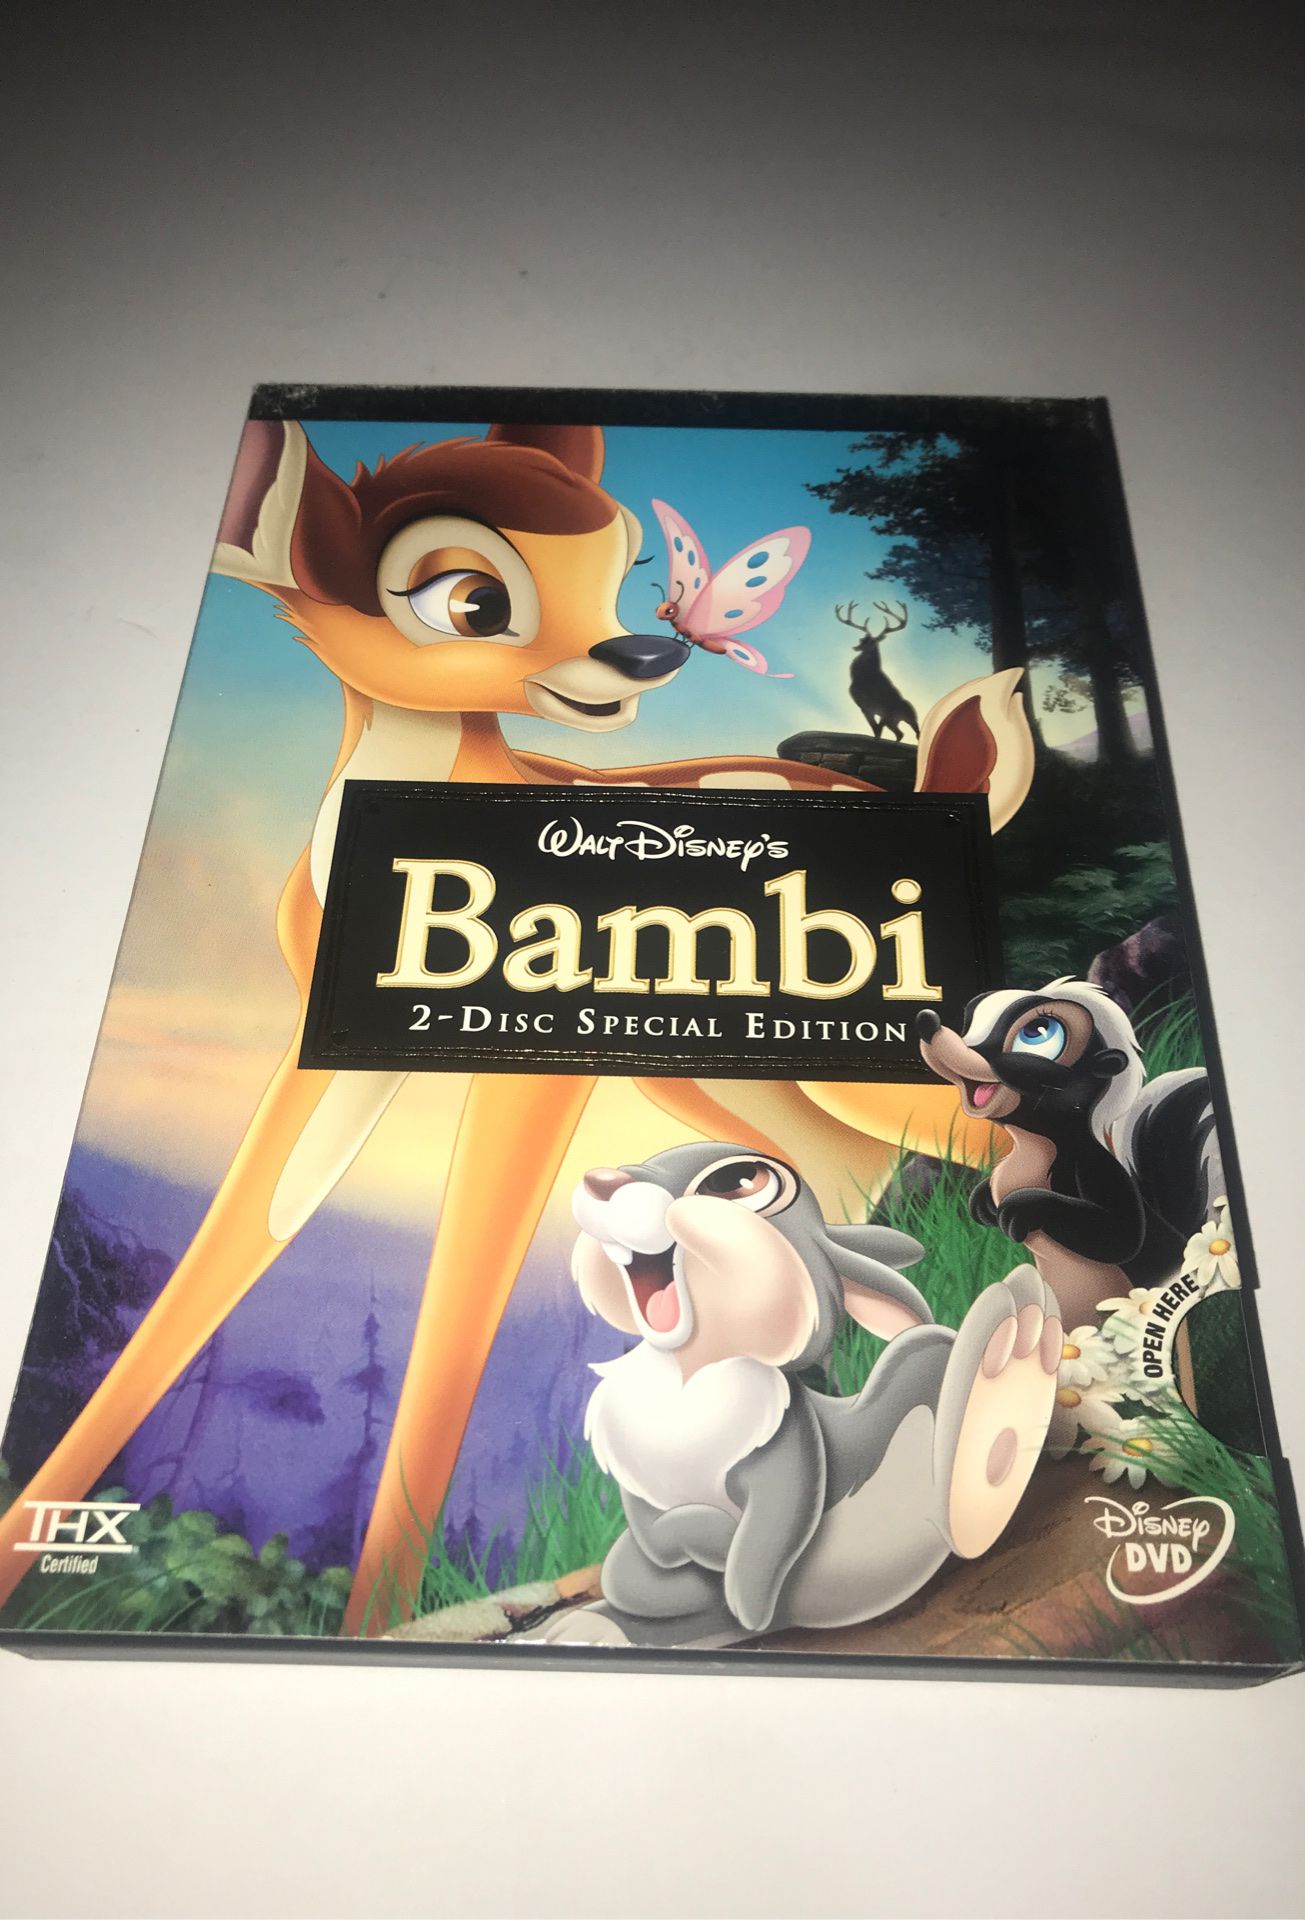 Disney’s Bambi DVD